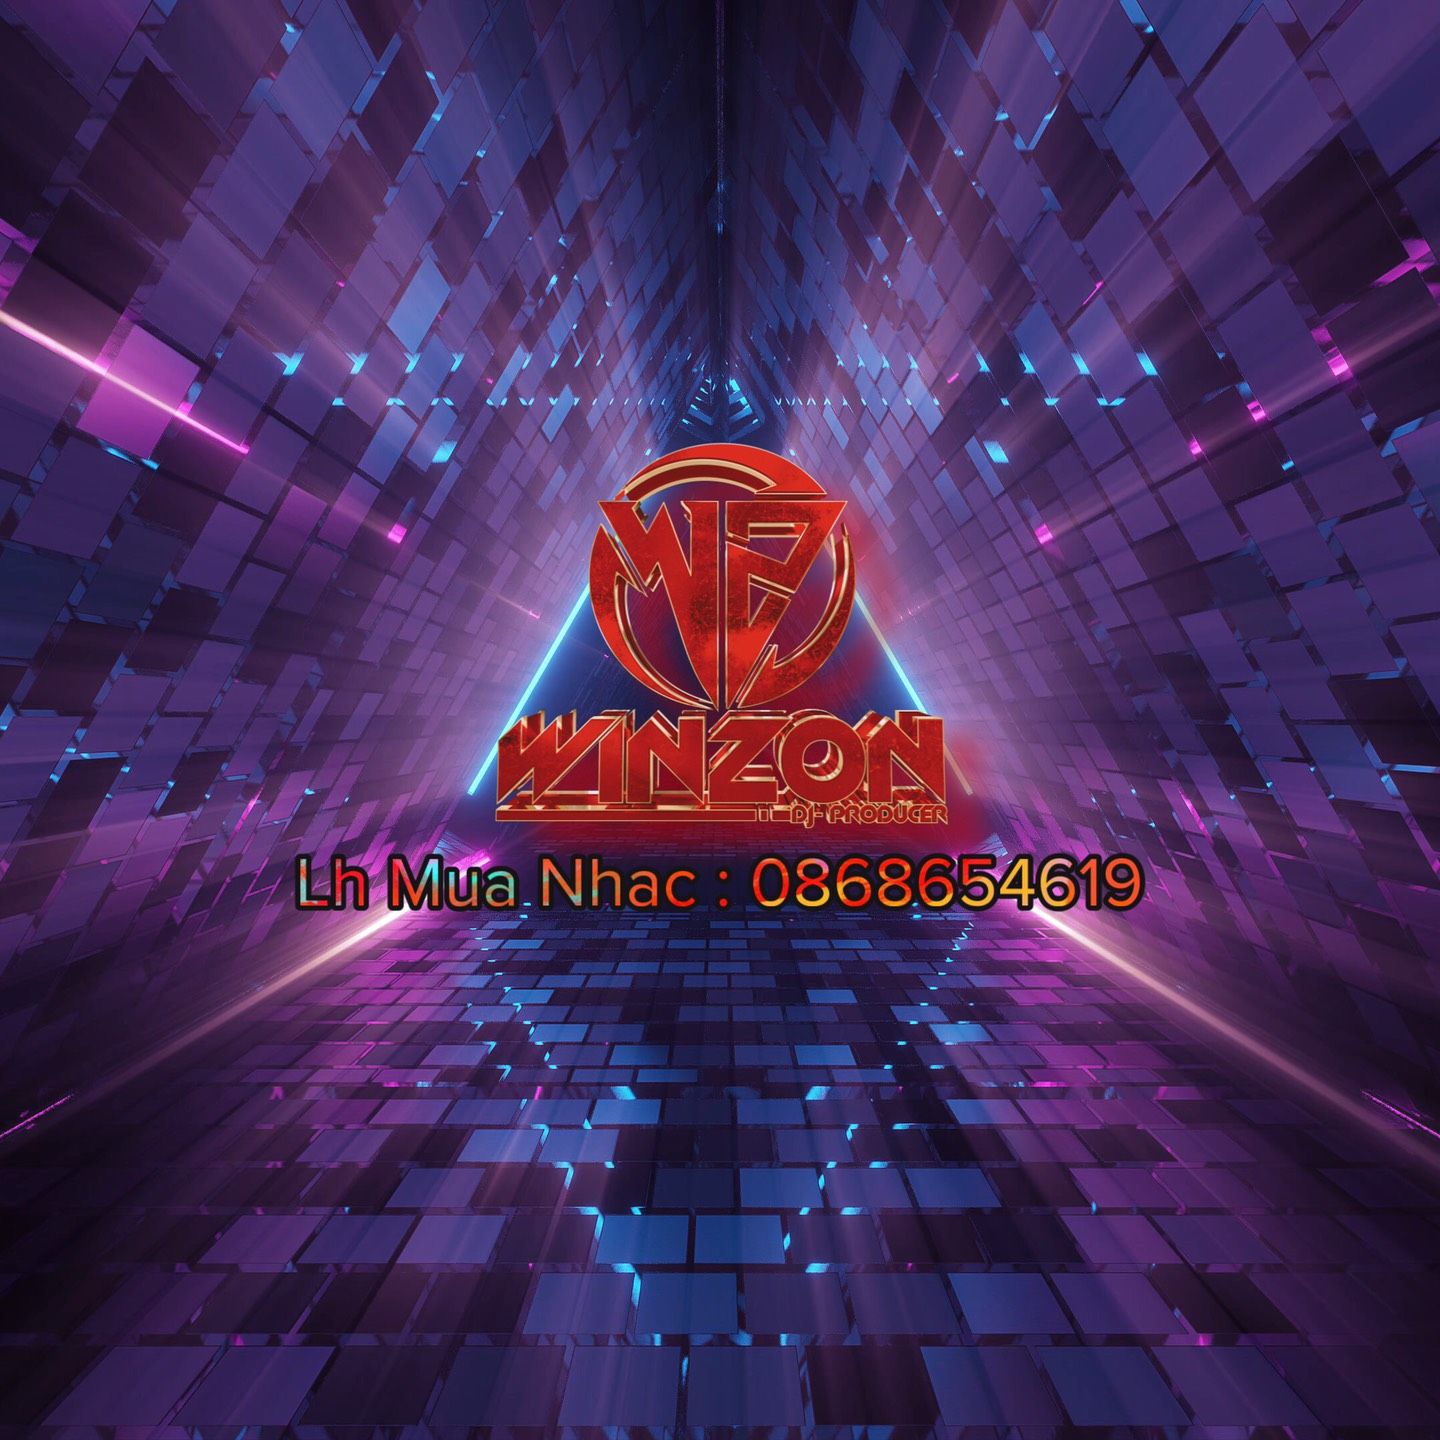 Stiahnuť ▼ Anaconda 2021 - Winzon Remix